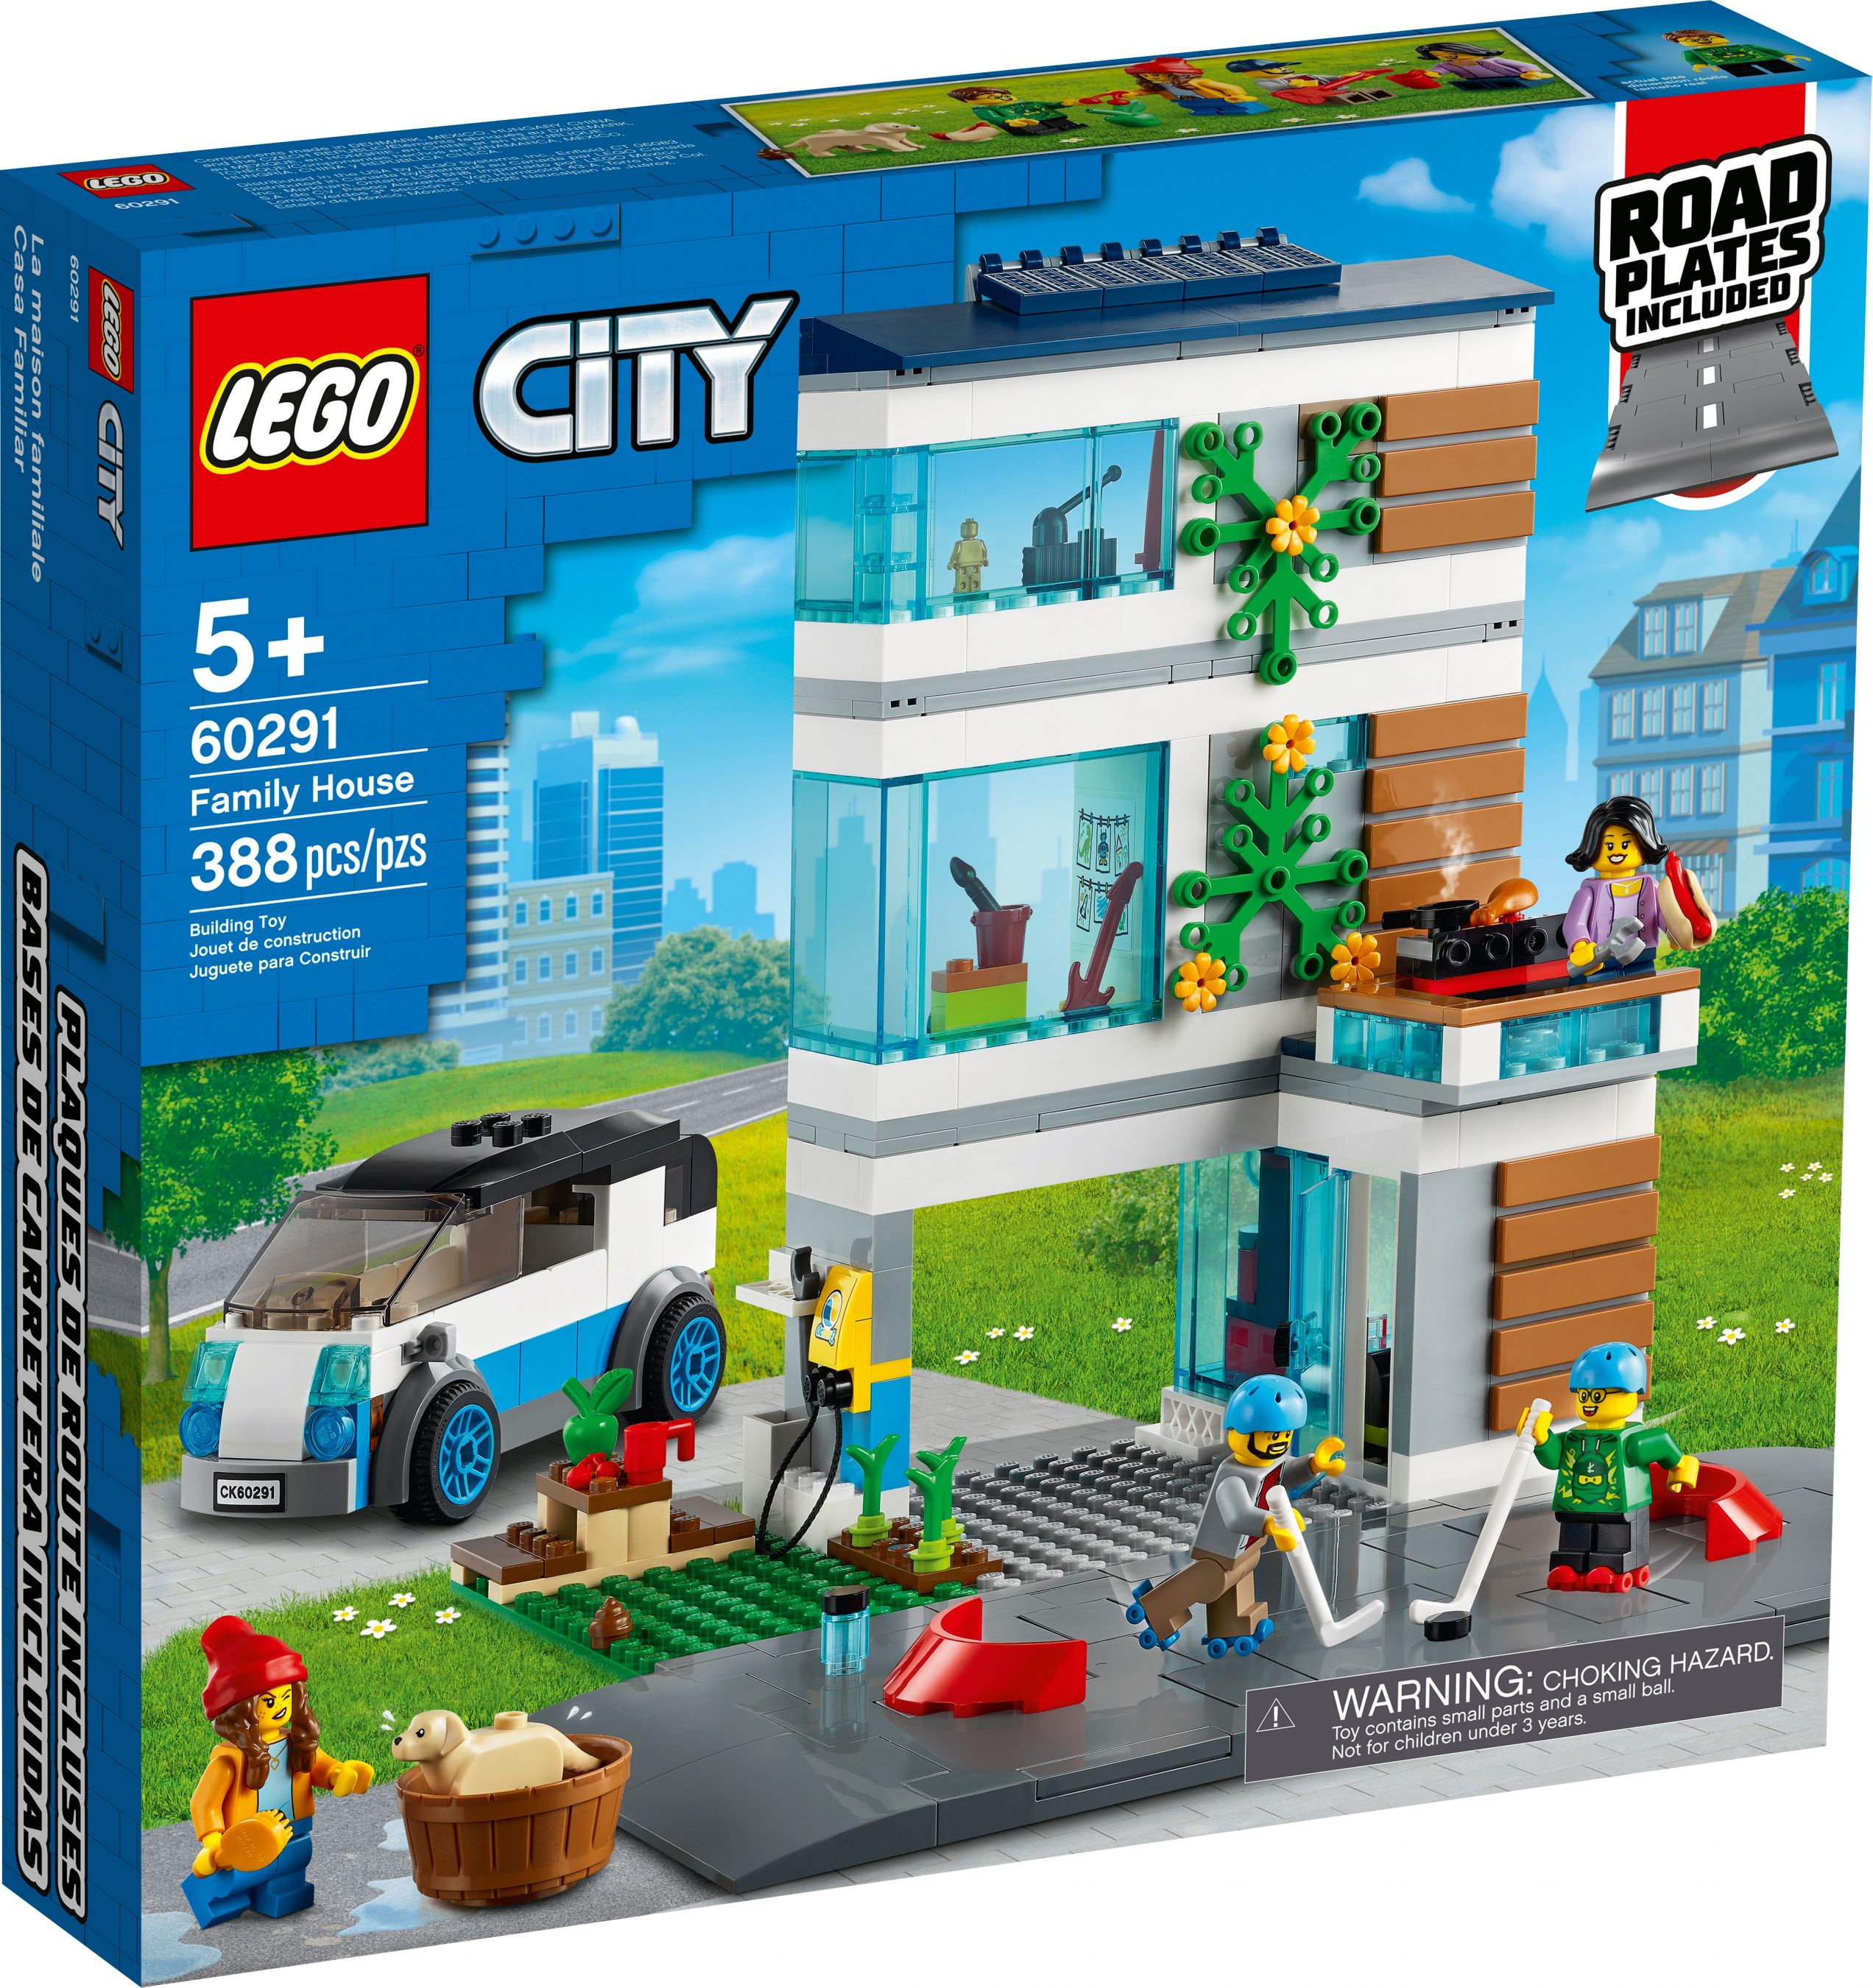 LEGO City 60291 Modernes Familienhaus LEGO_60291_alt1.jpg